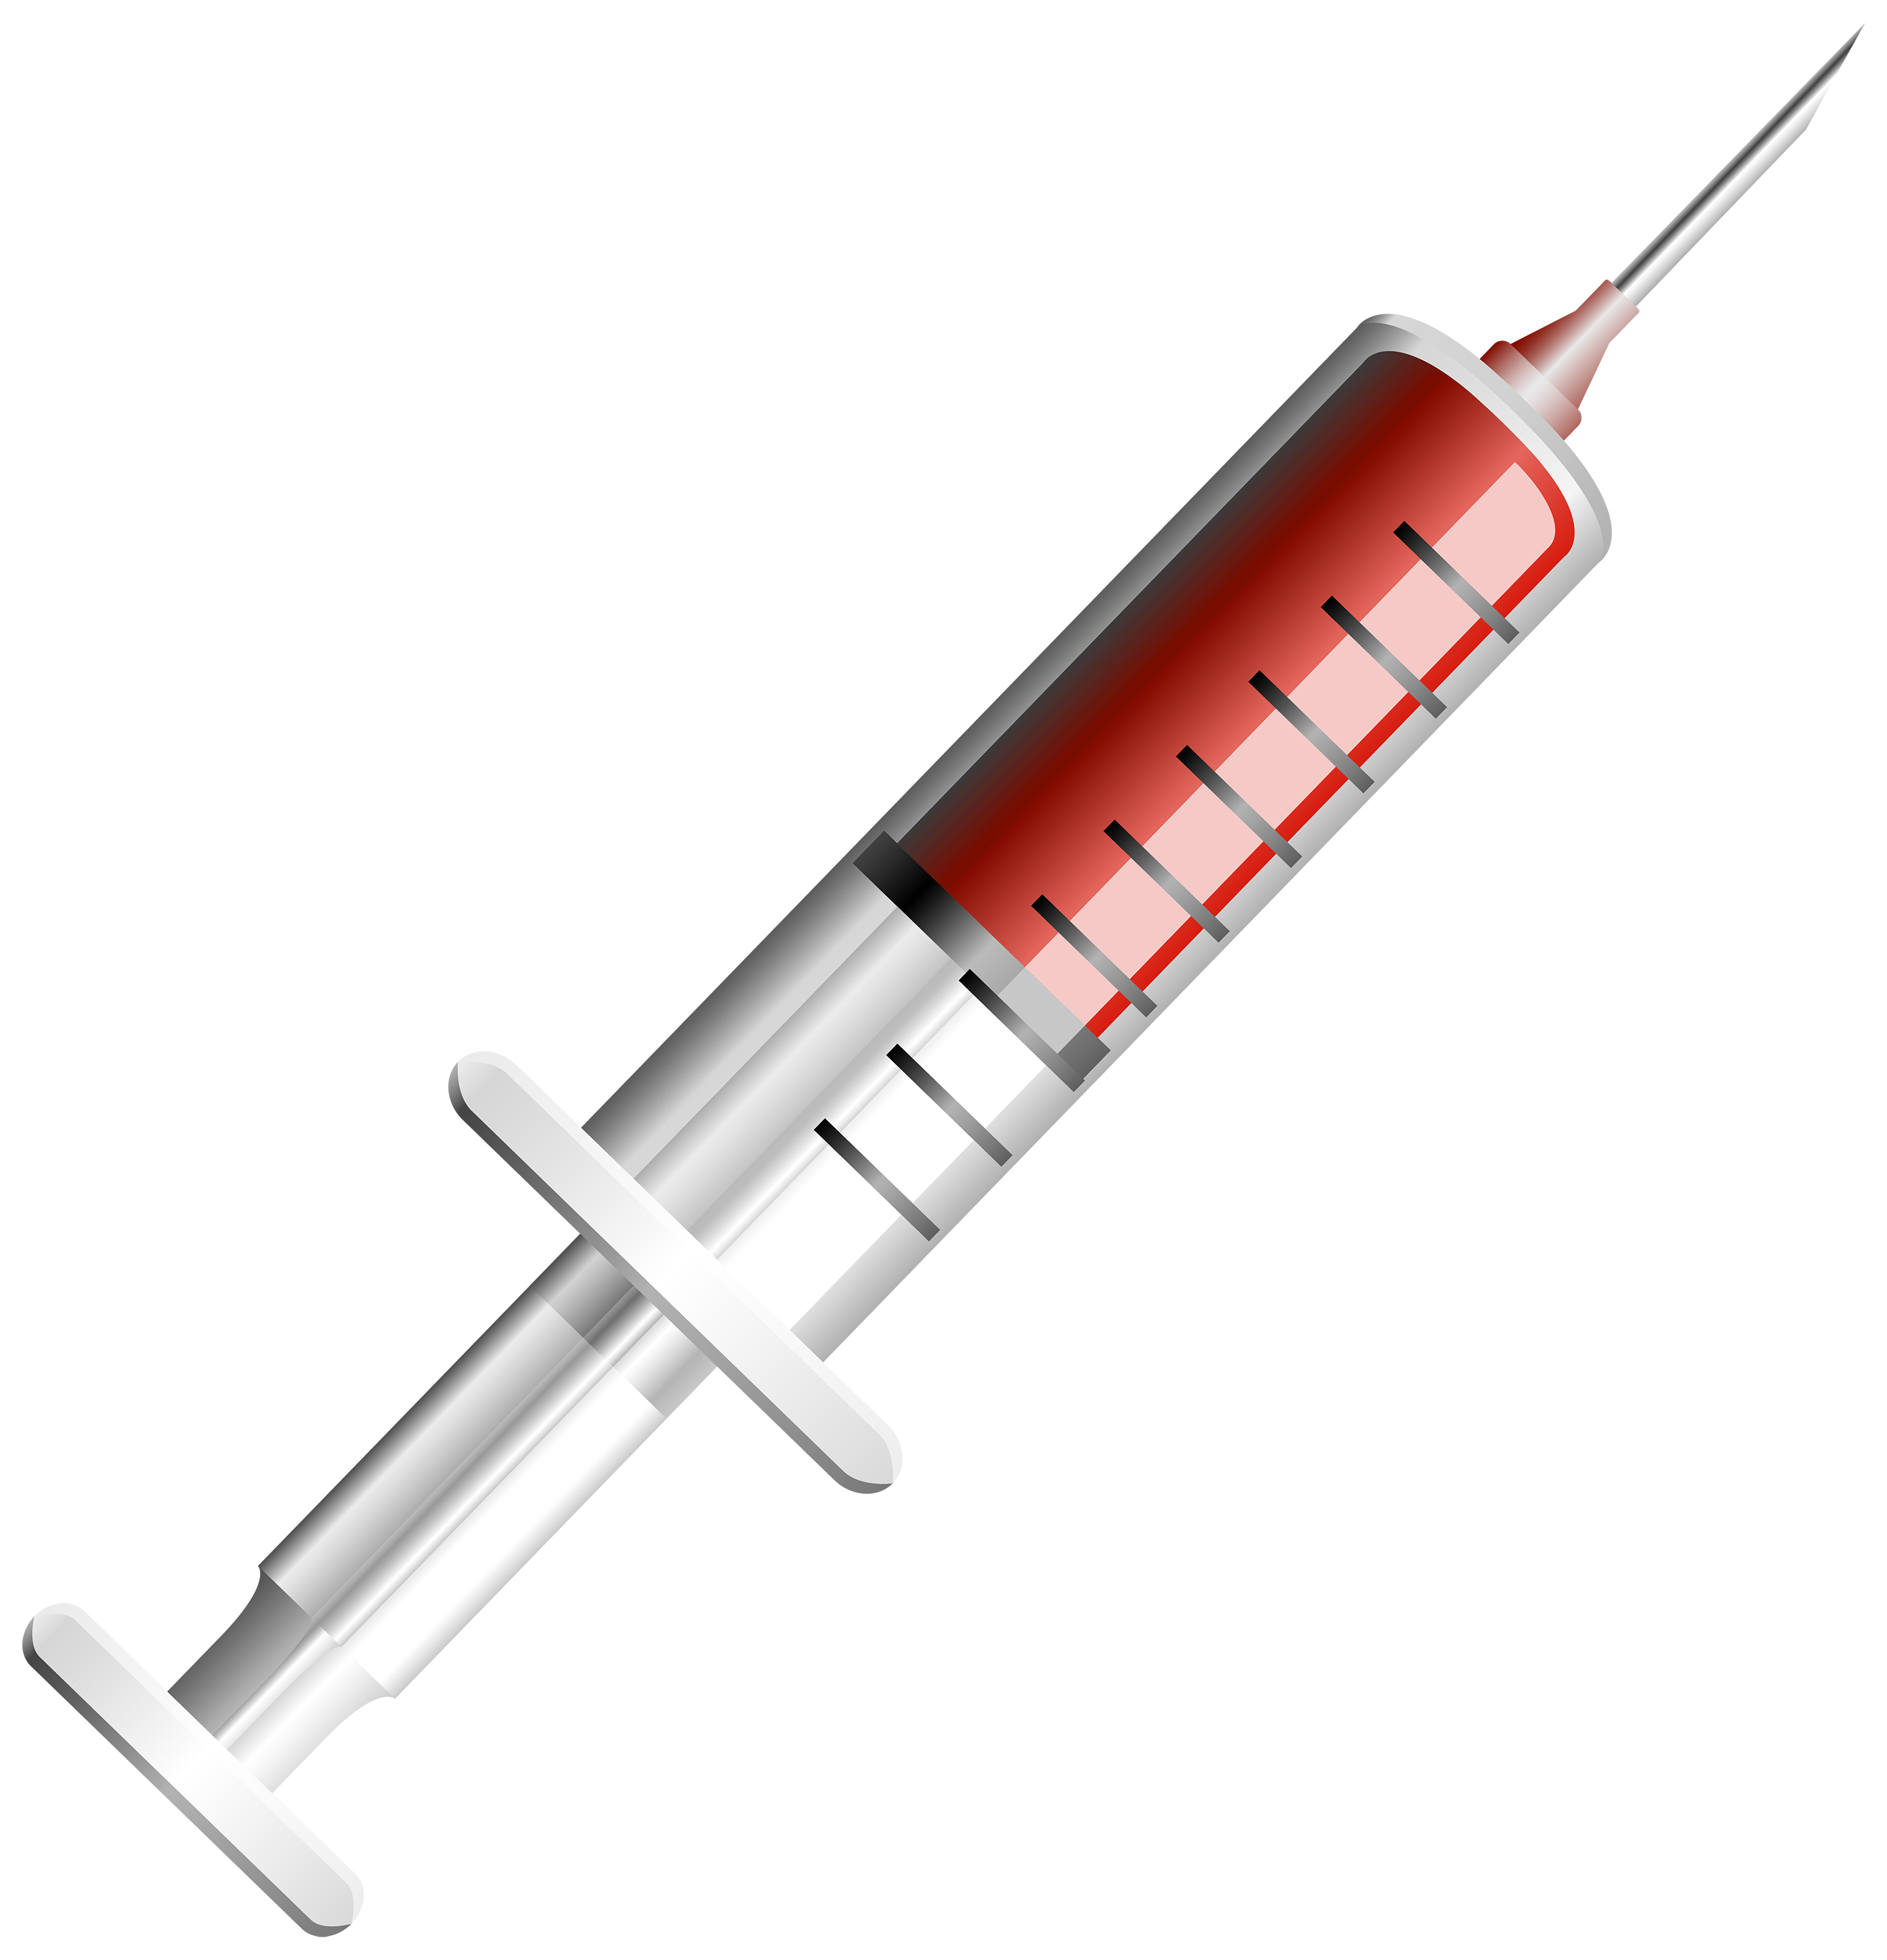 Syringe images download pics. Clipboard clipart medical